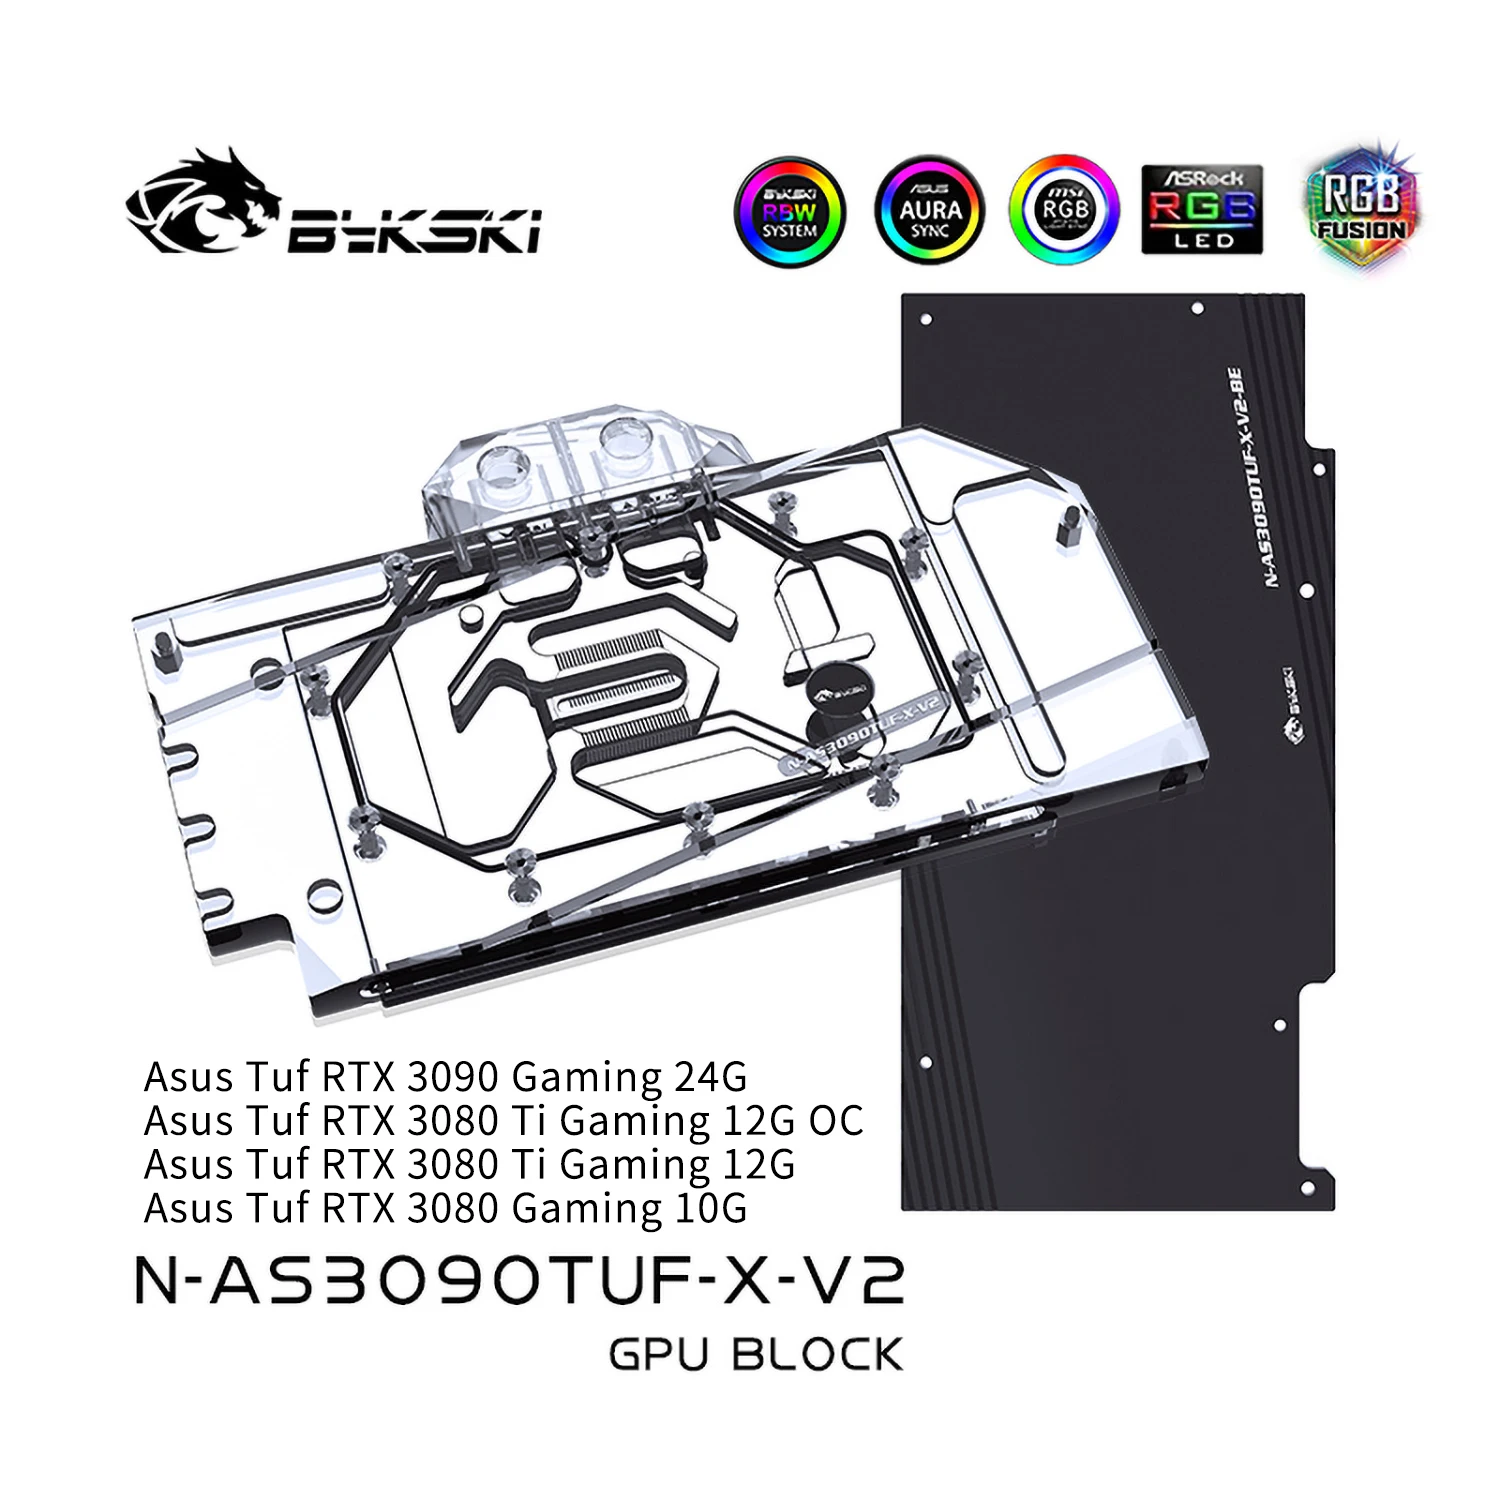 

Блок водяного охлаждения Bykski GPU, для ASUS TUF RTX3090/3080/3080ti GAMING, система охлаждения жидкости с задней пластиной, N-AS3090TUF-X-V2